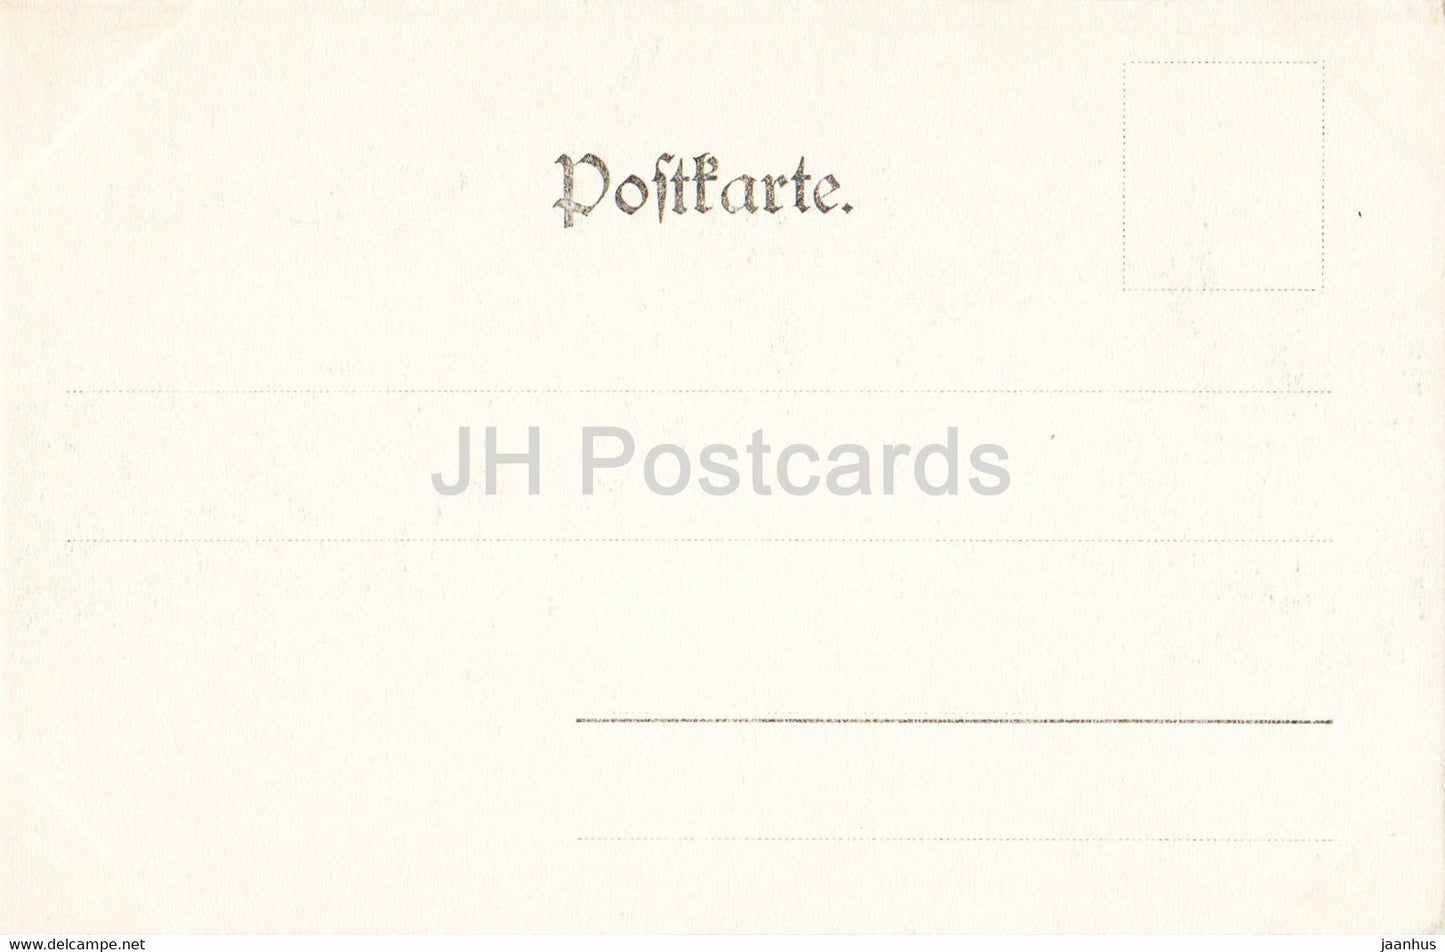 Berlin - Kgl Bibliothek - bibliothèque - carte postale ancienne - Allemagne - inutilisée